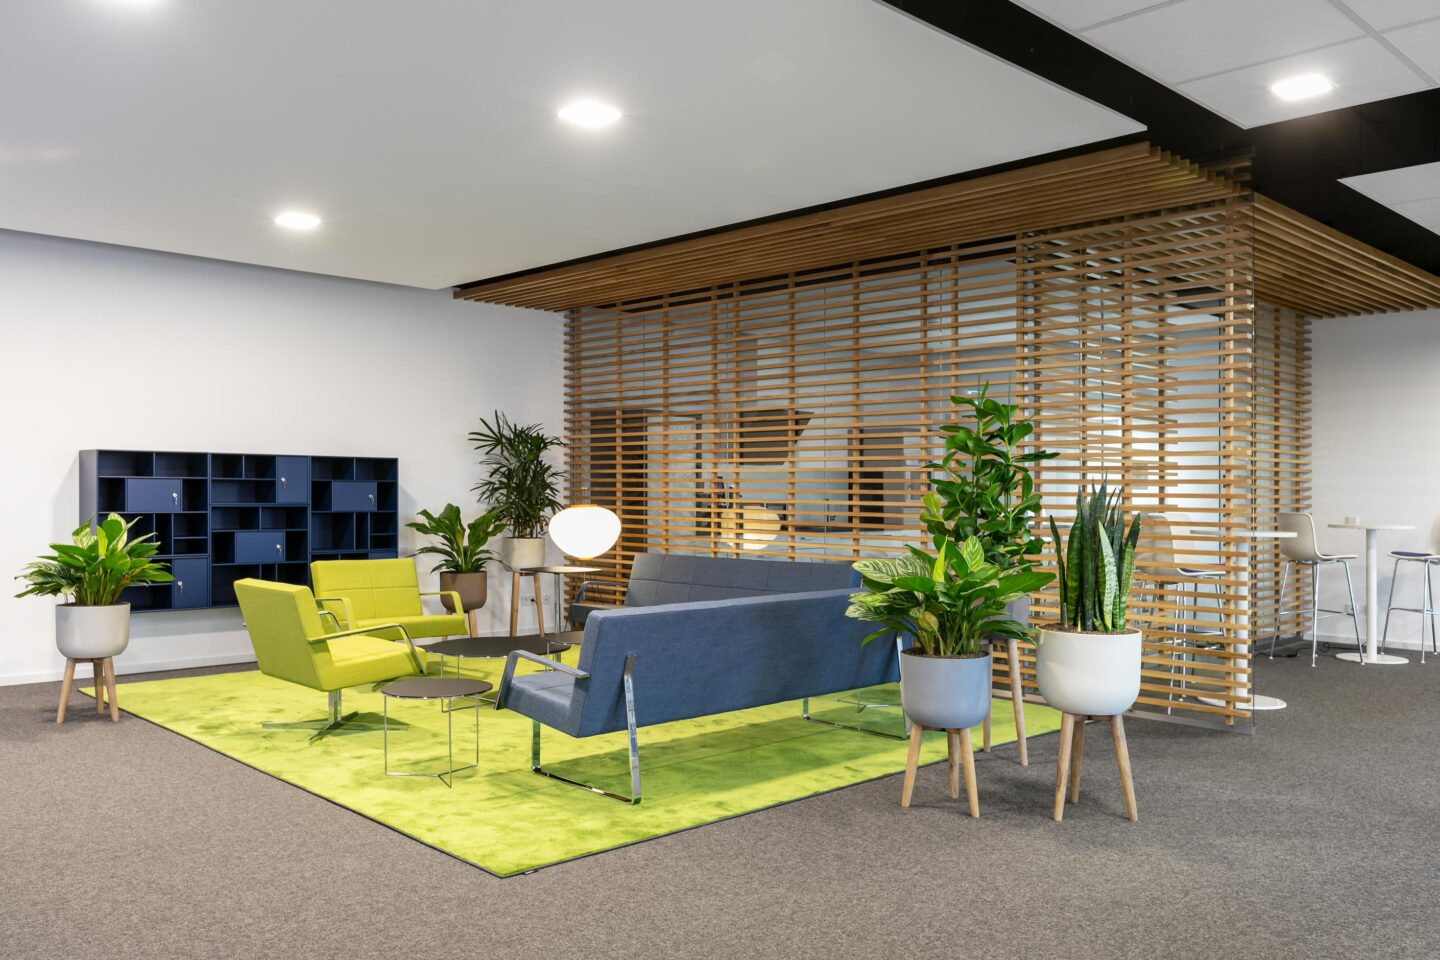 Nussbaum Medien Ettlingen │ office furniture from Vitra, Brunner & werner works │ room in room solution